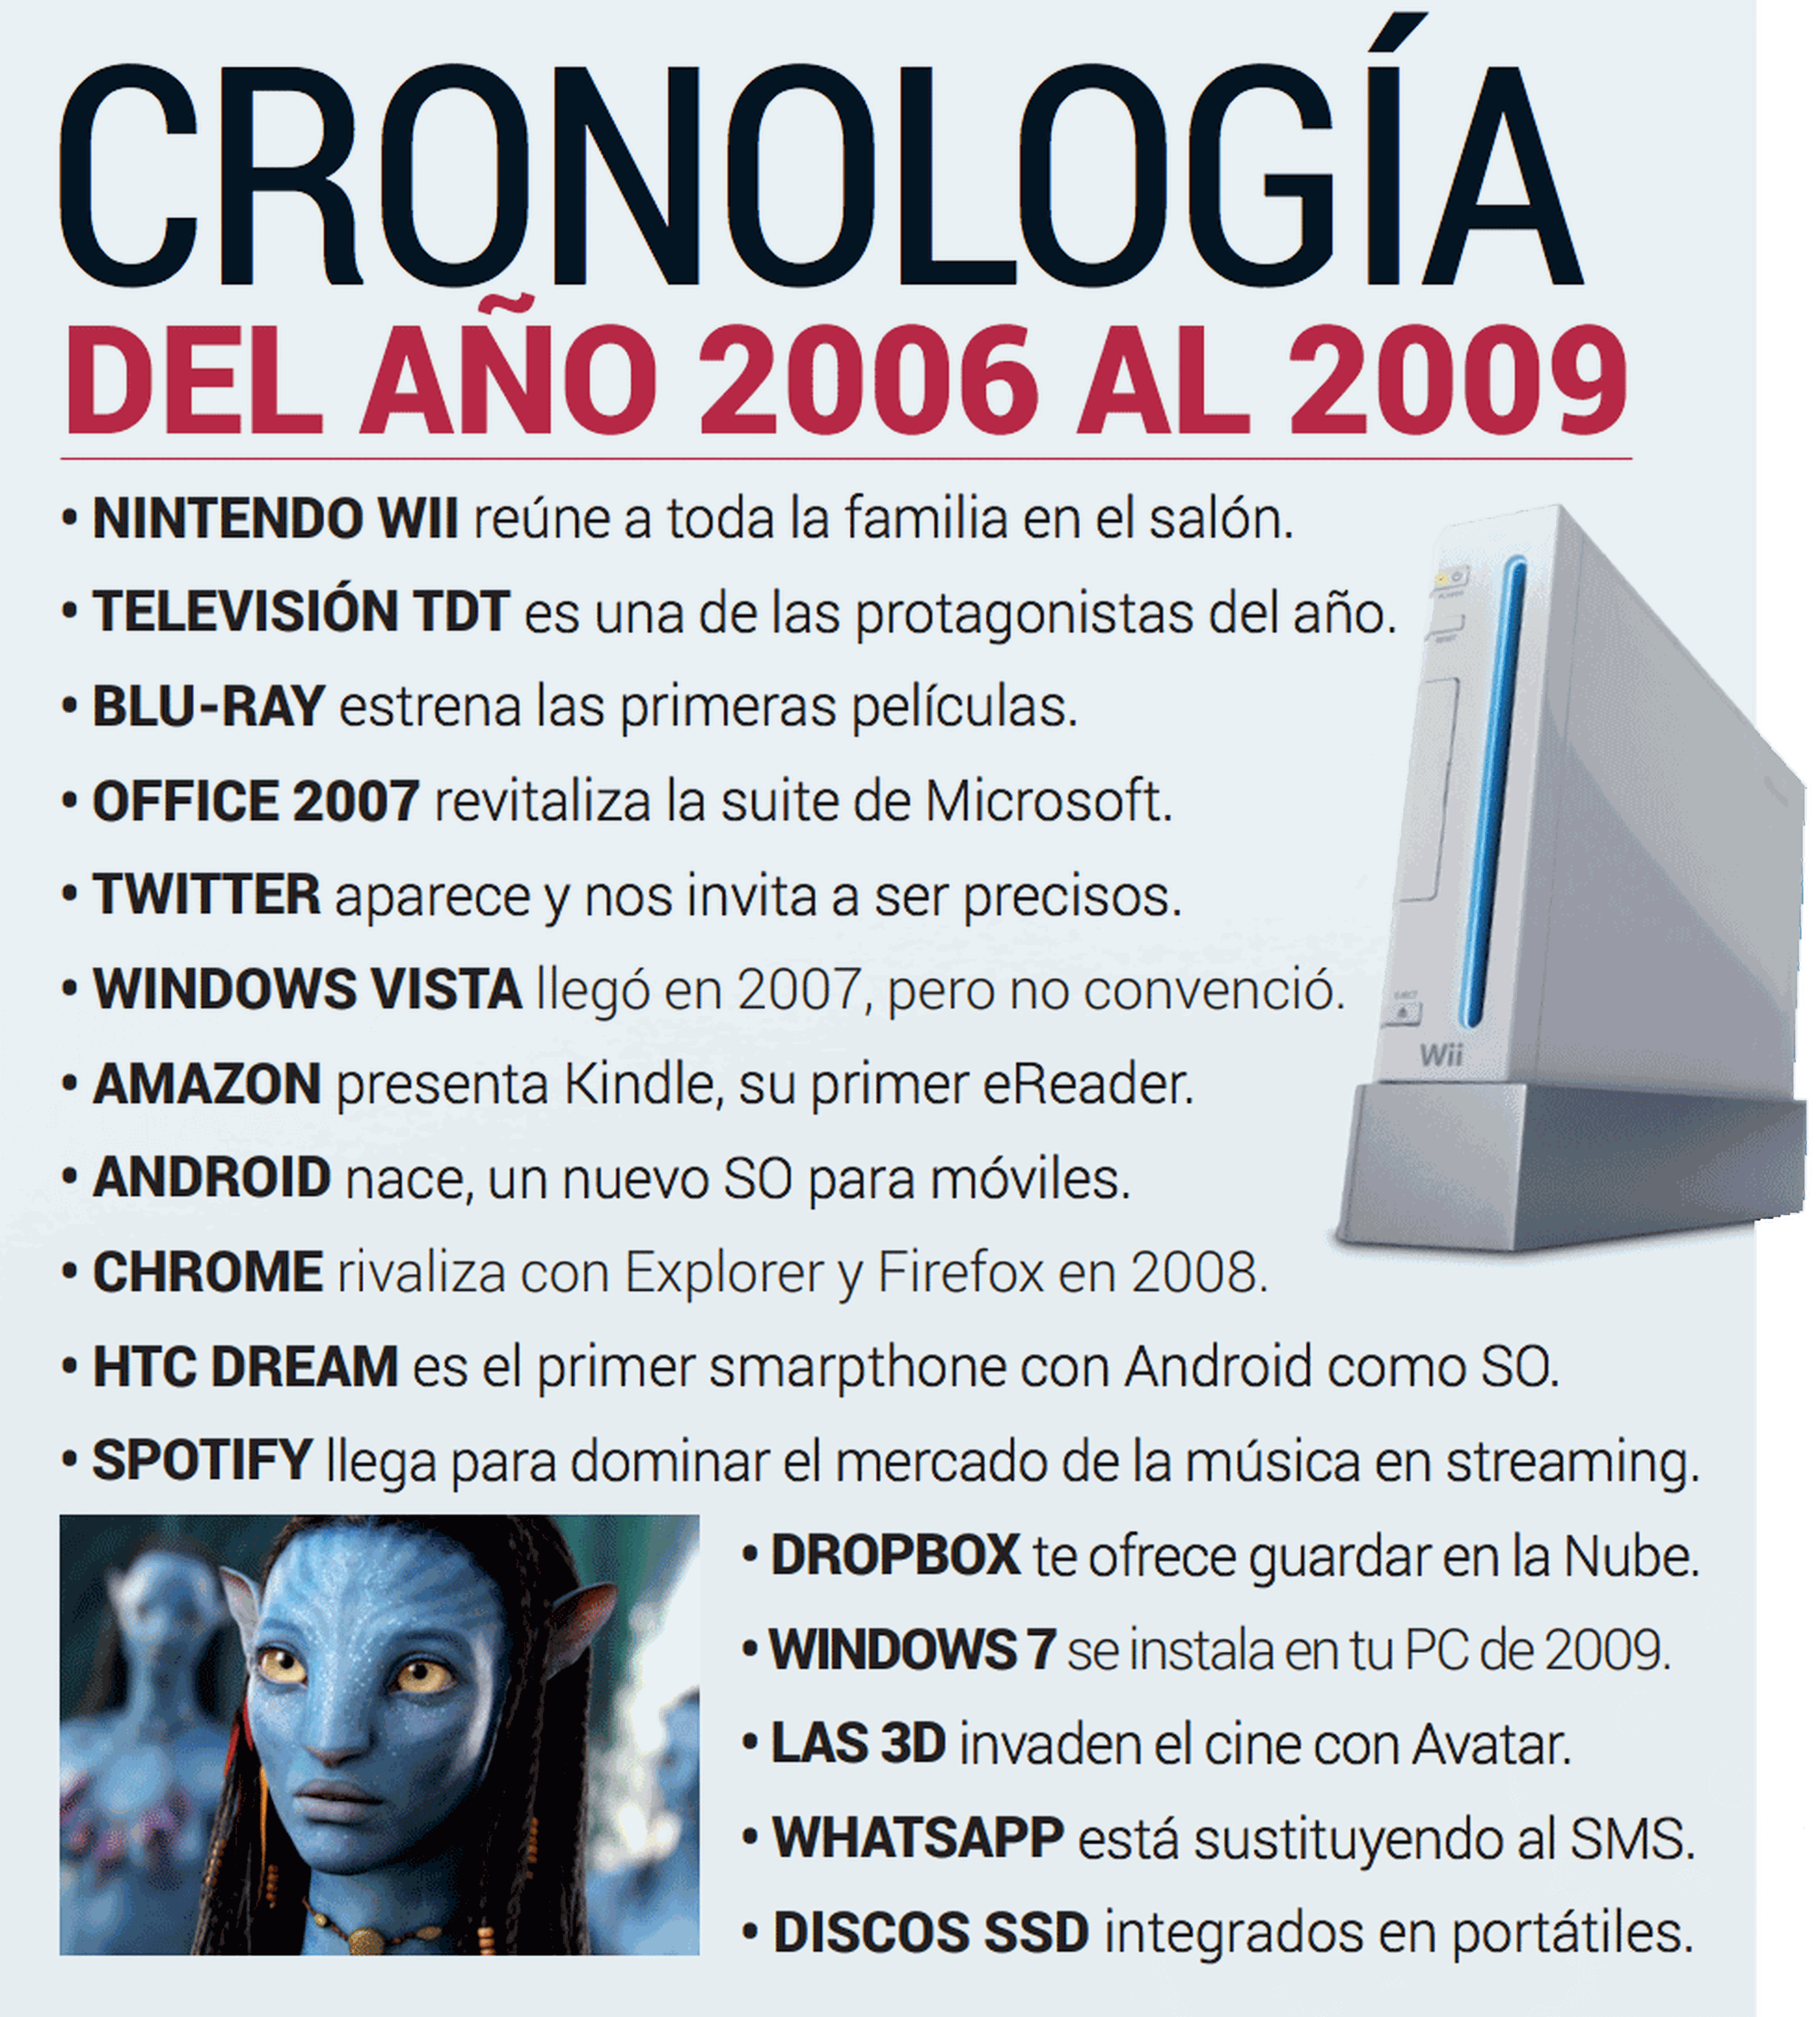 Cronologia revista computerhoy 2006